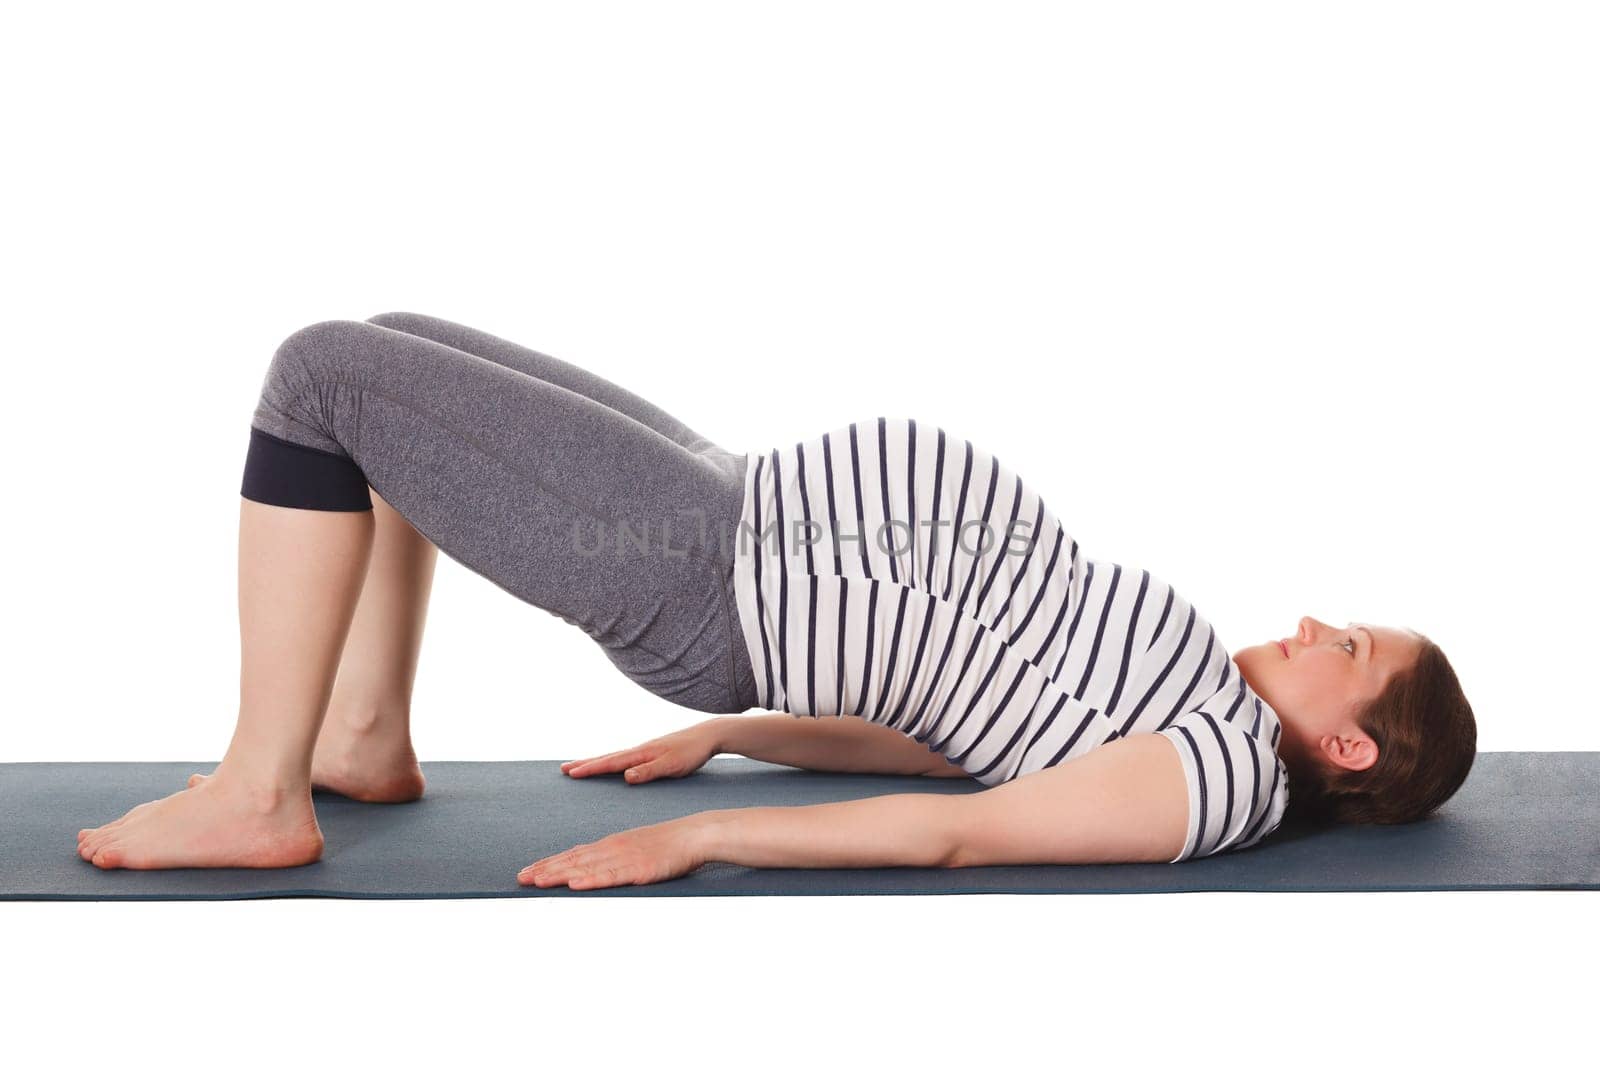 Pregnant woman doing yoga asana Purvottanasana by dimol